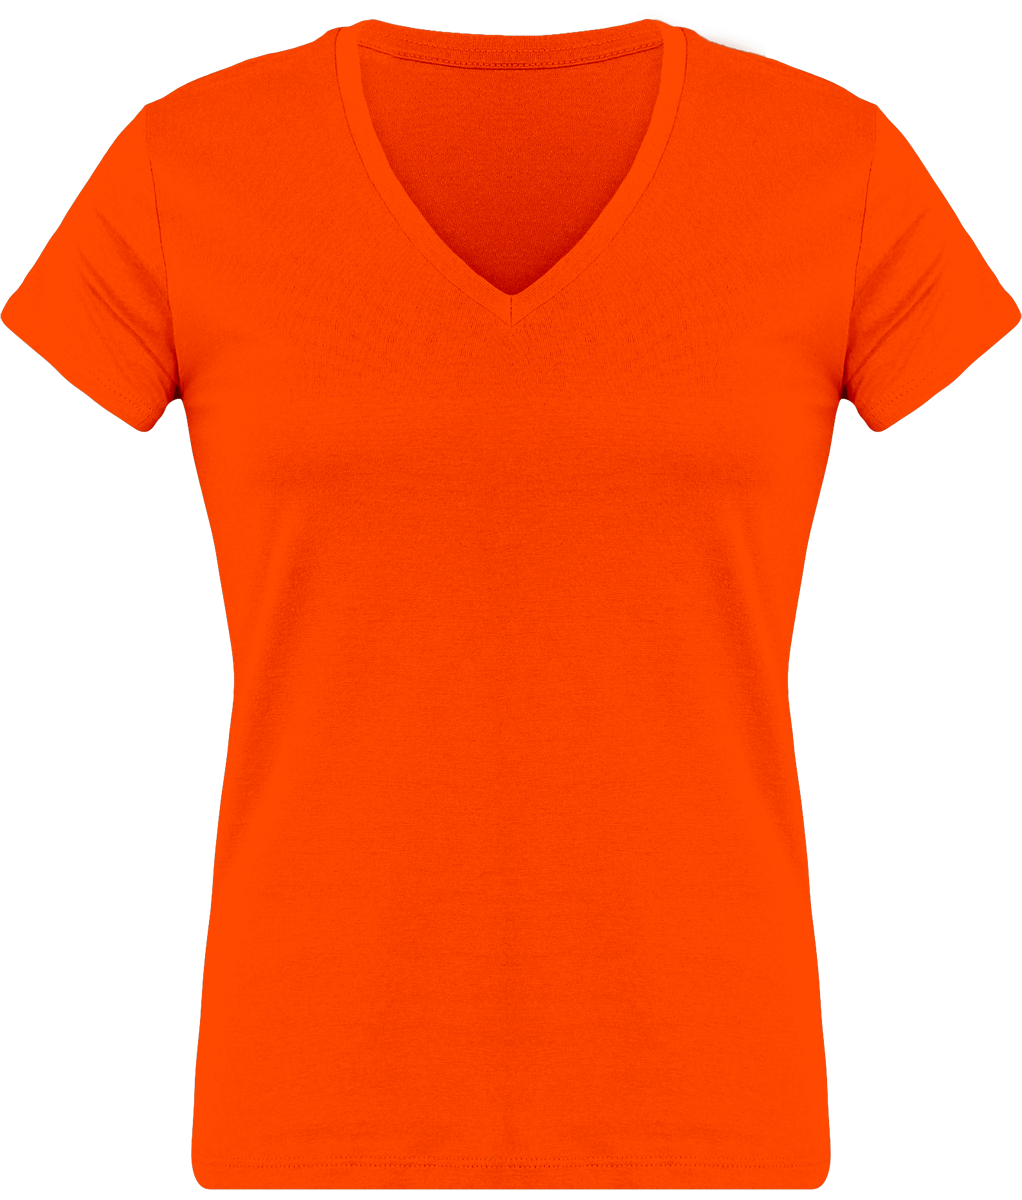 Customizable Women's T-Shirt, Feminine And Comfortable With Its V-Neck Orange